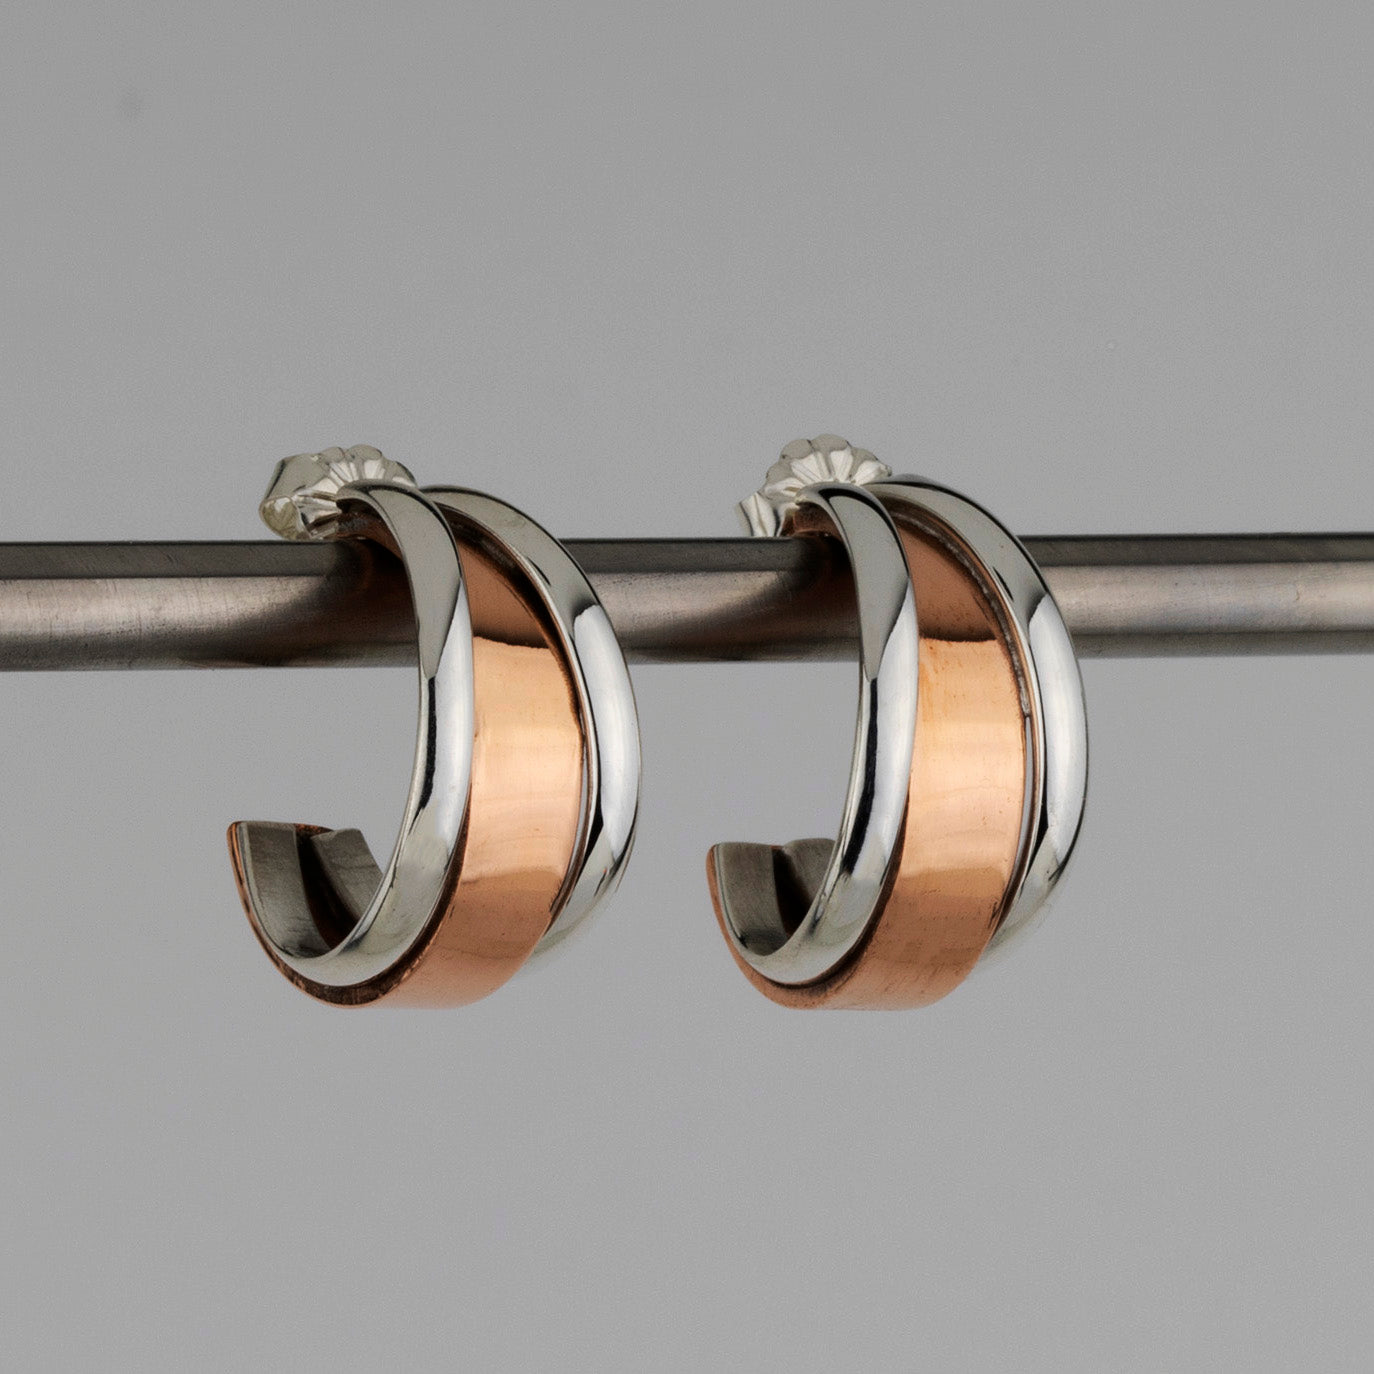 sterling silver and copper rimmed hoop earrings